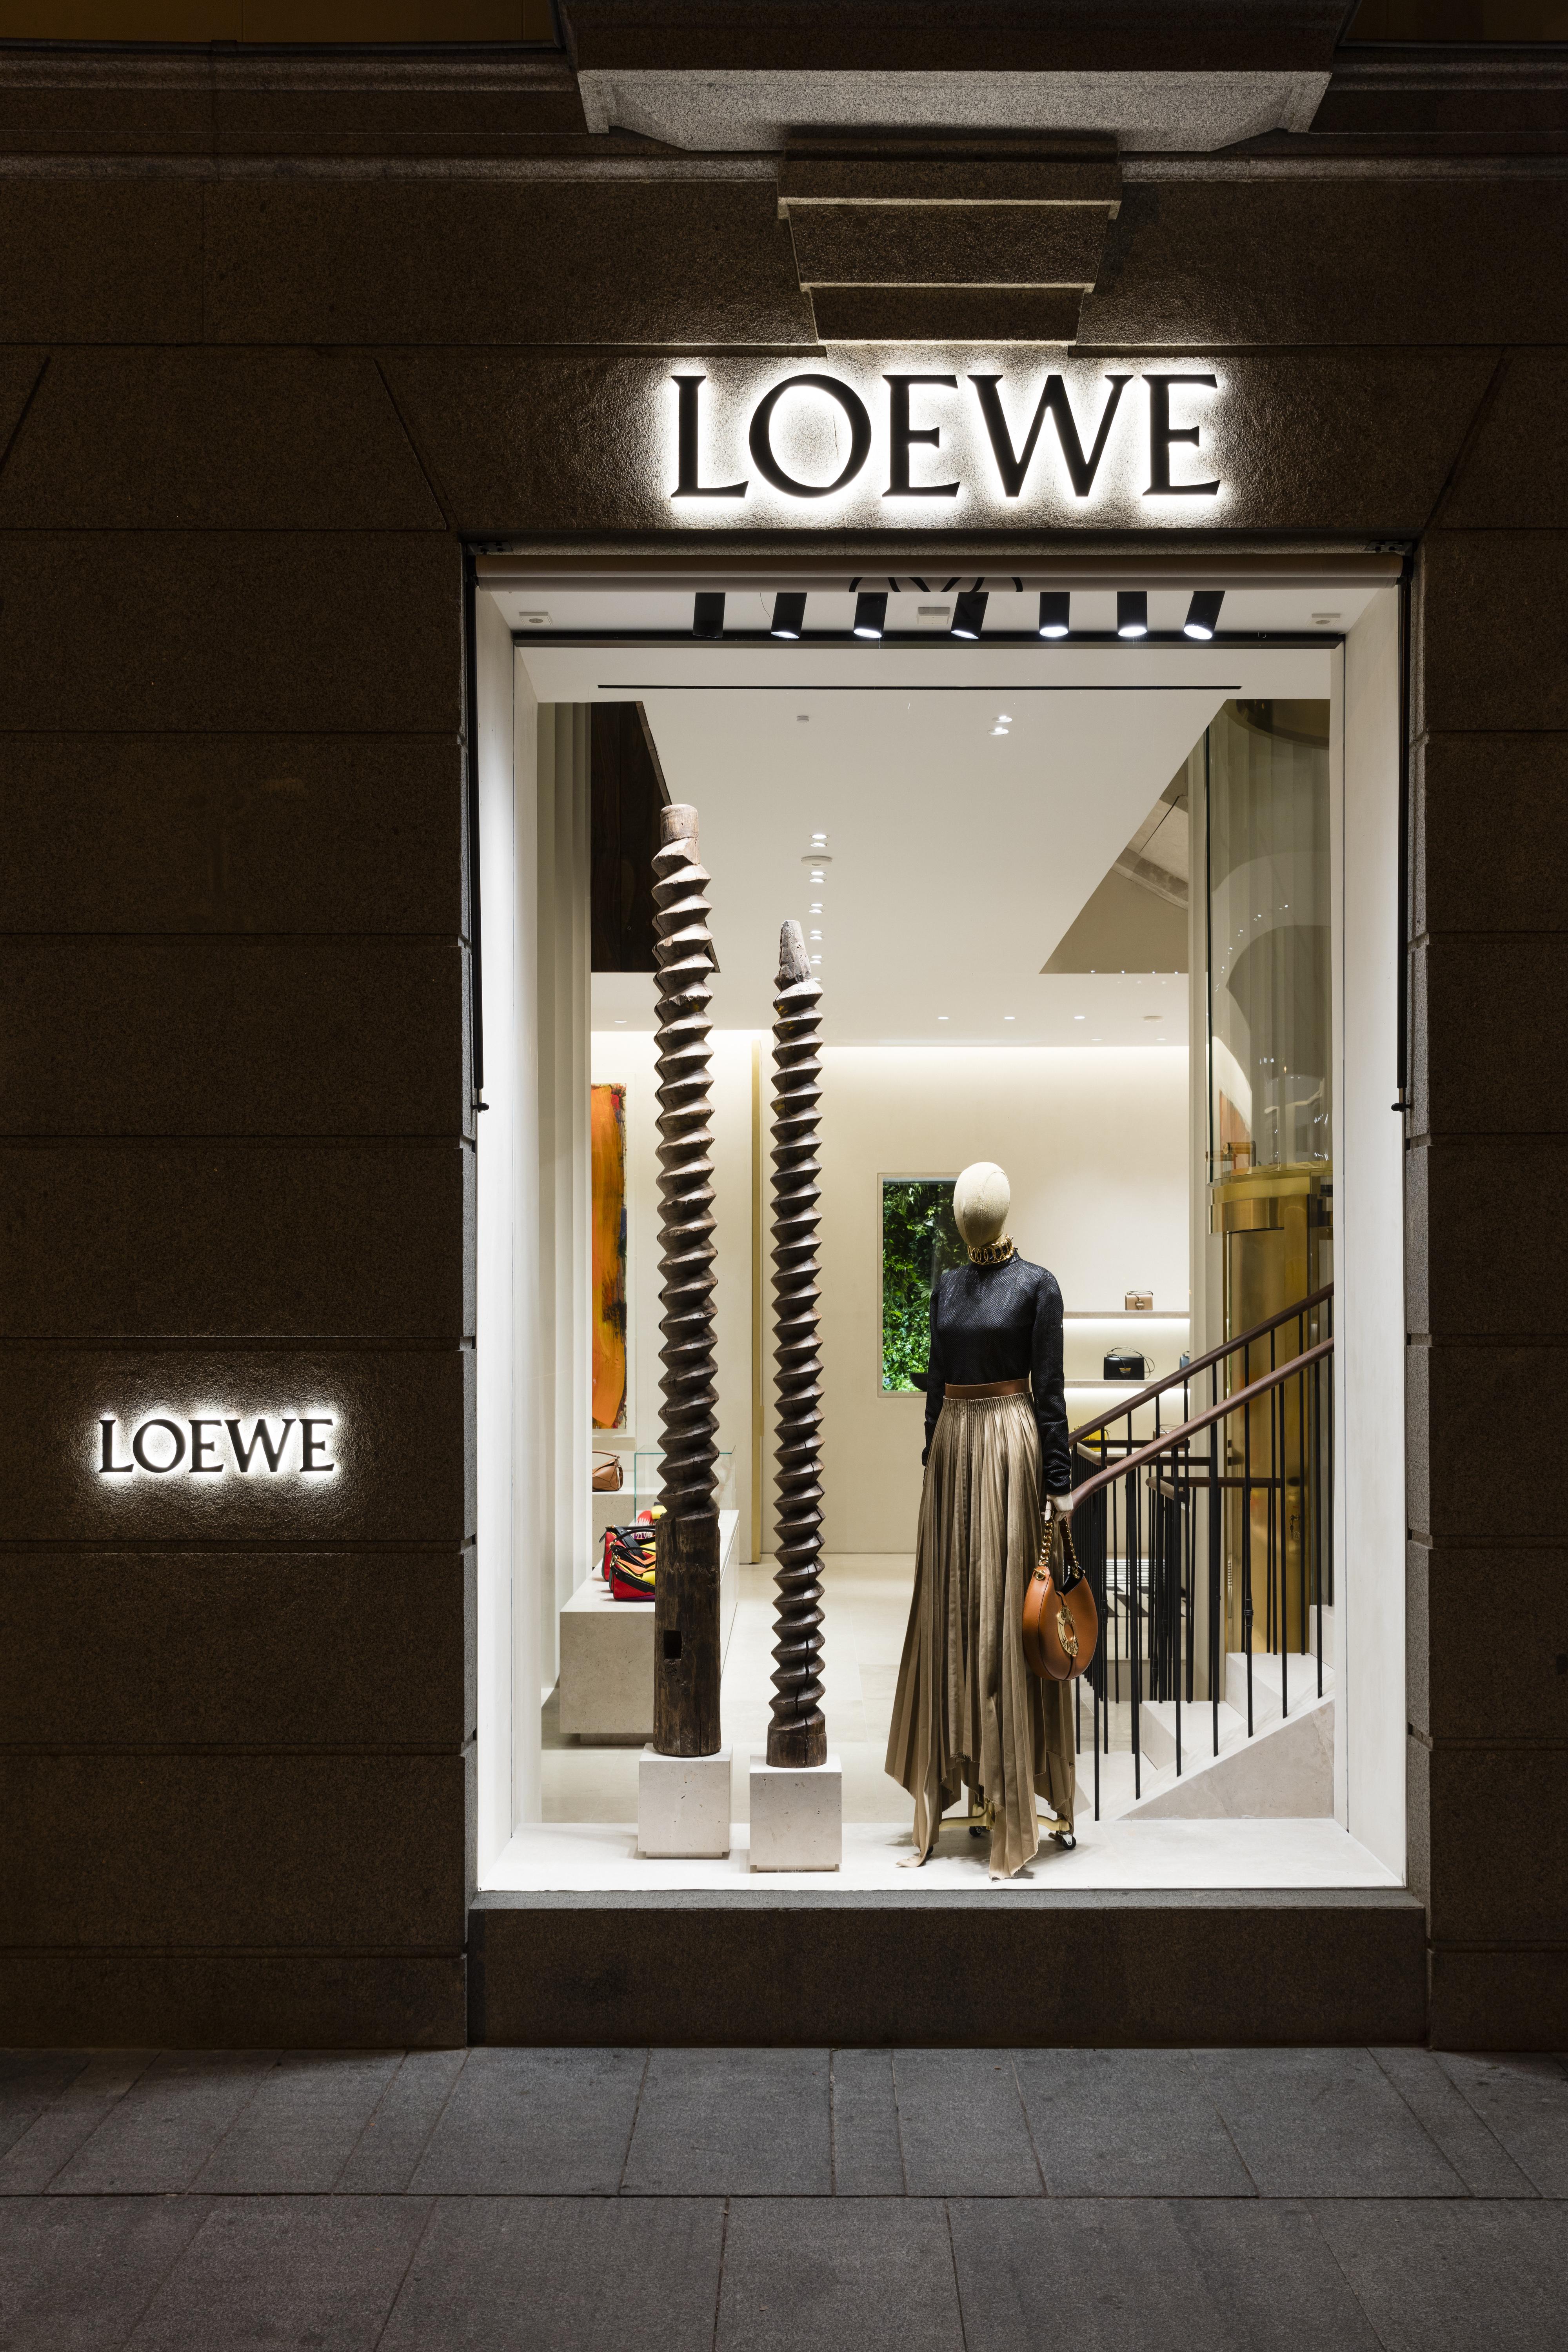 CASA LOEWE charms Madrid with an innovative concept - LVMH